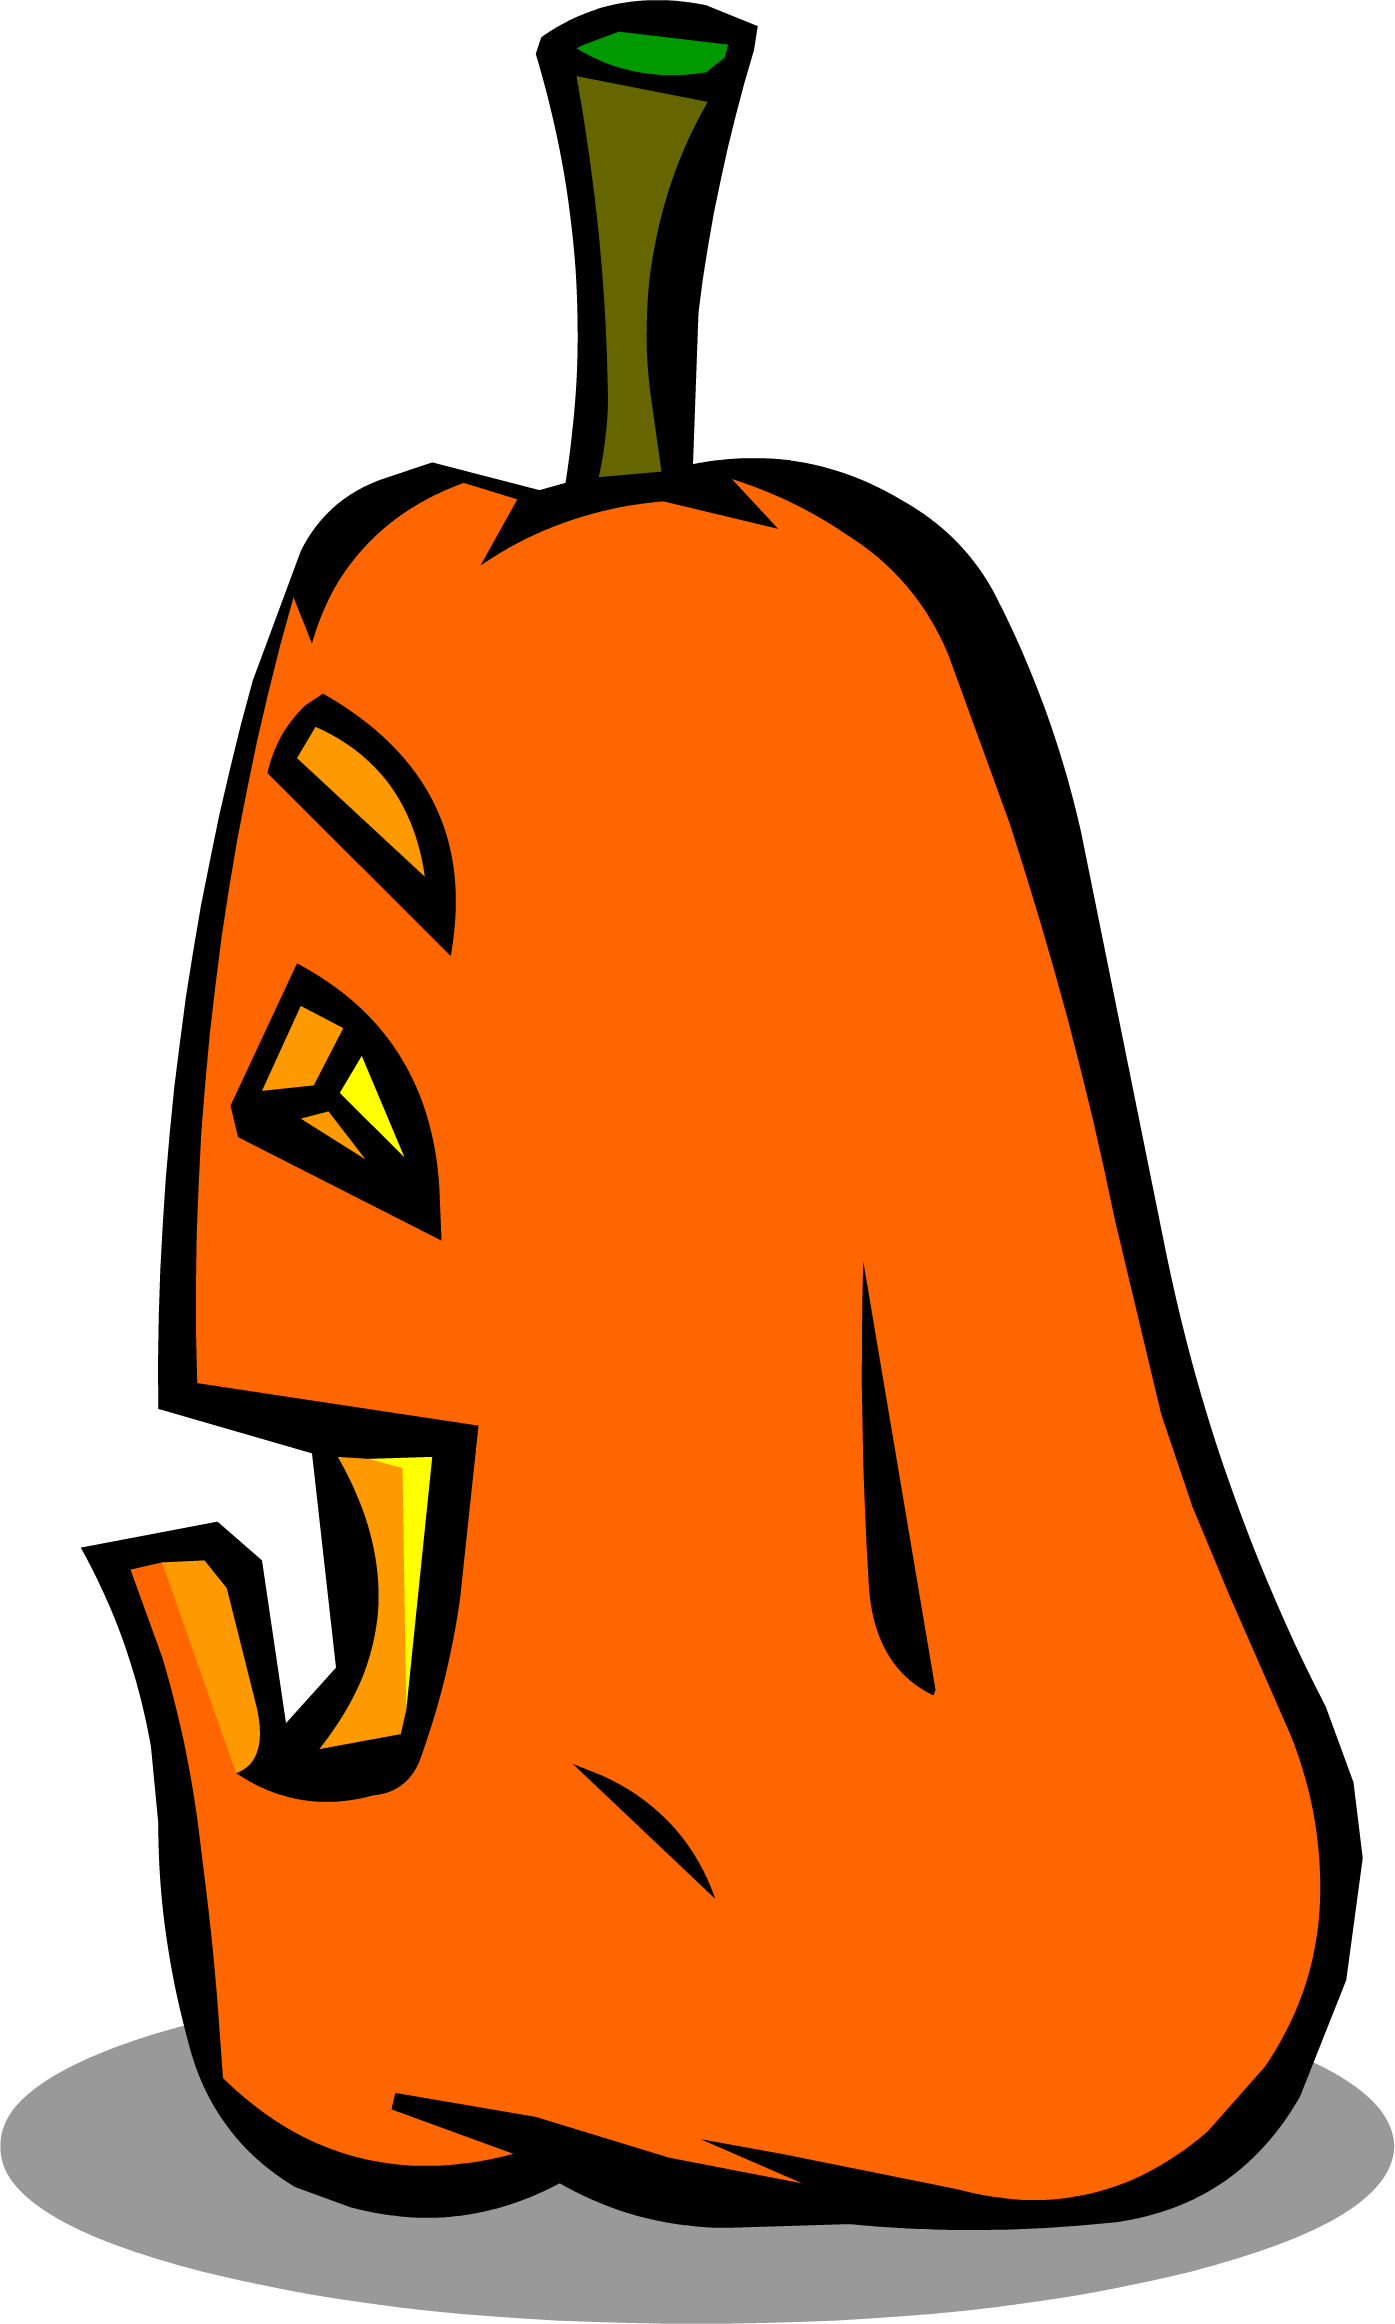 A Cartoon Pumpkin With A Black Background